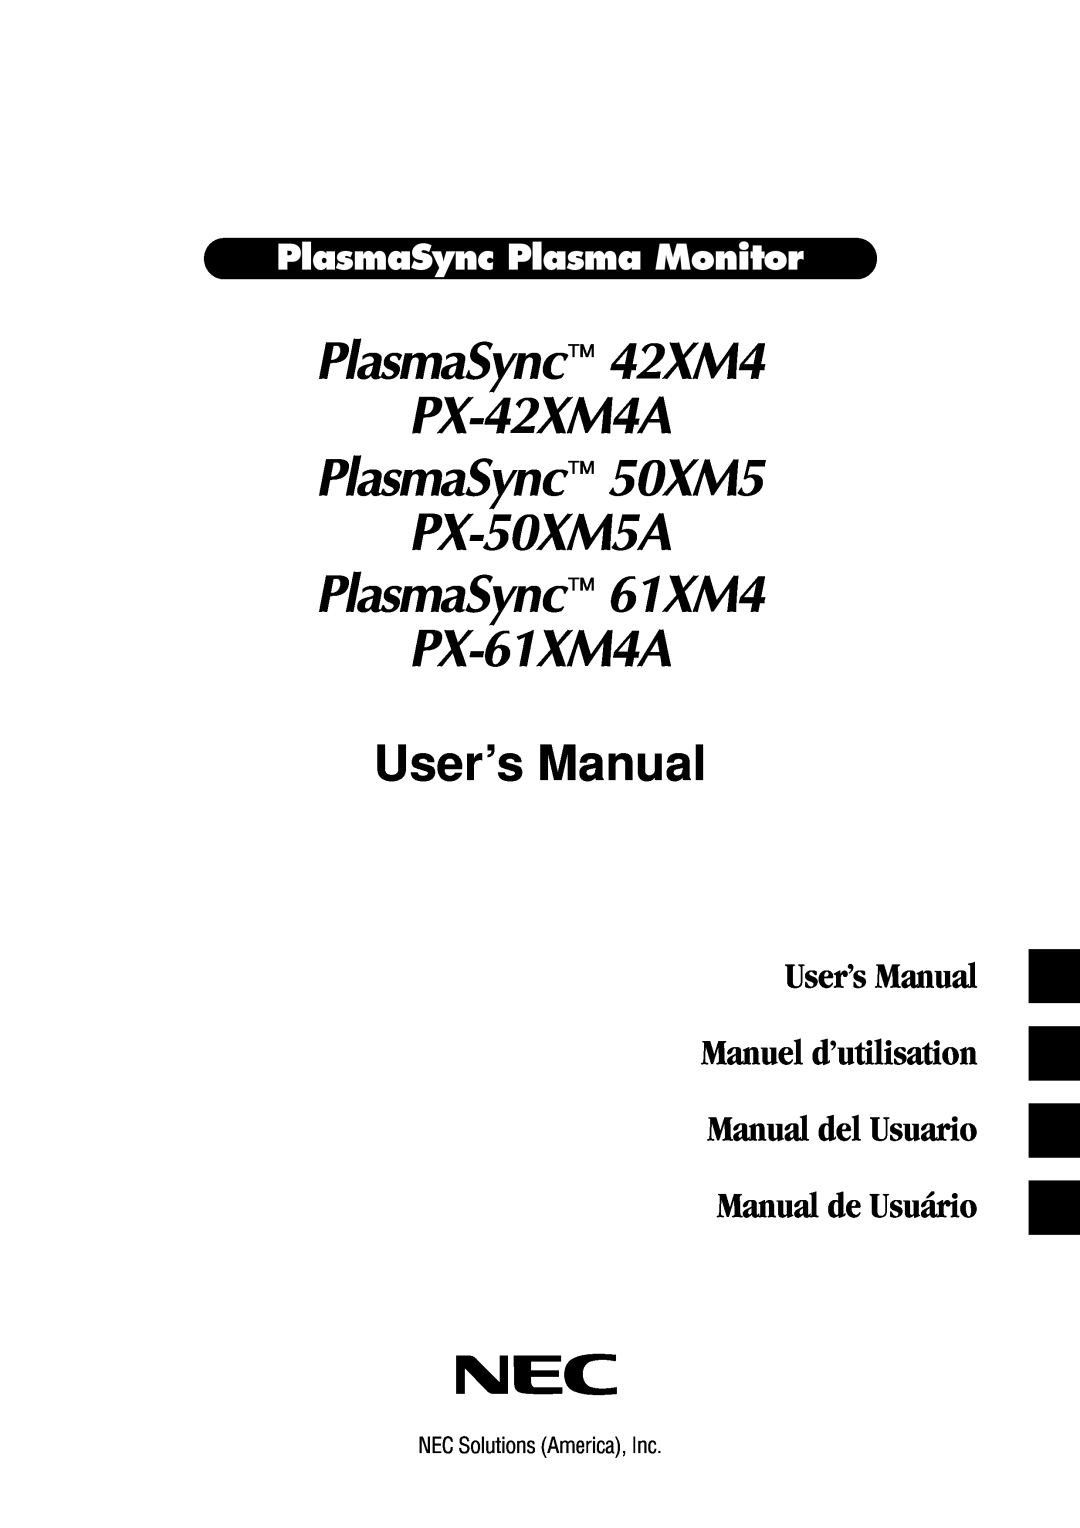 NEC manual PlasmaSync 42XM4 PX-42XM4A PlasmaSync 50XM5 PX-50XM5A, PlasmaSync 61XM4 PX-61XM4A, User’s Manual 